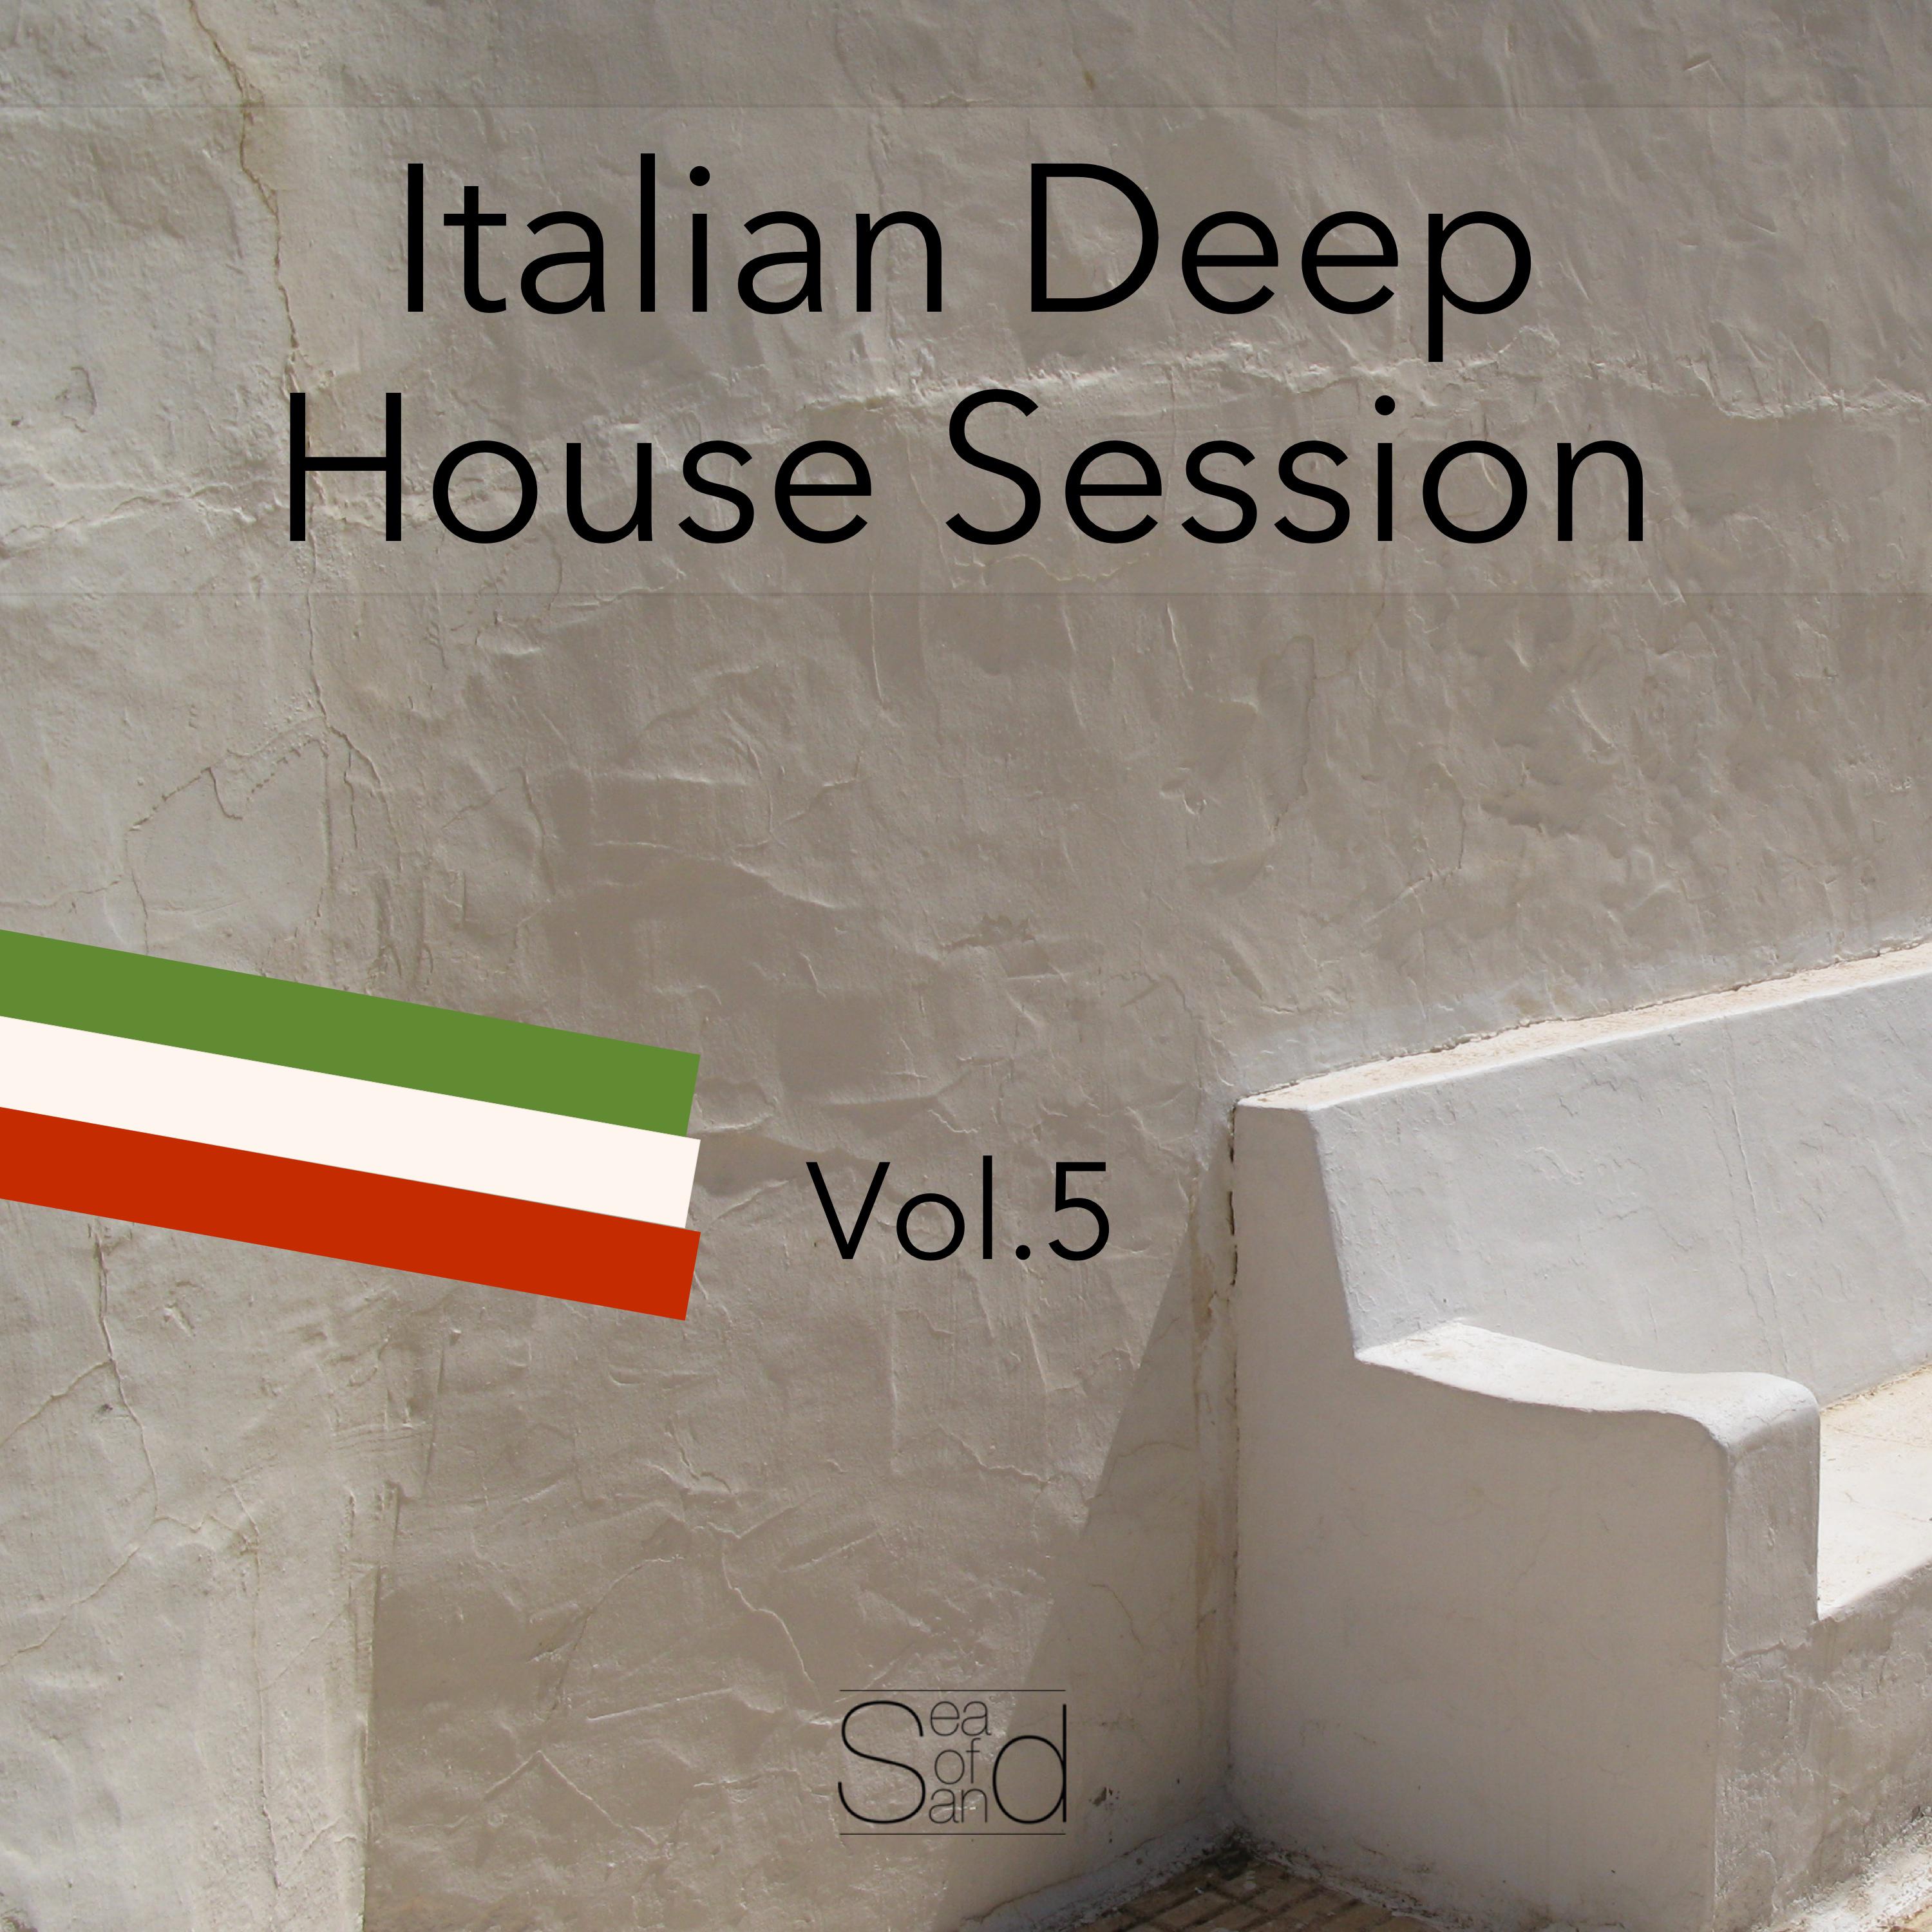 Italian Deep House Session, Vol. 5